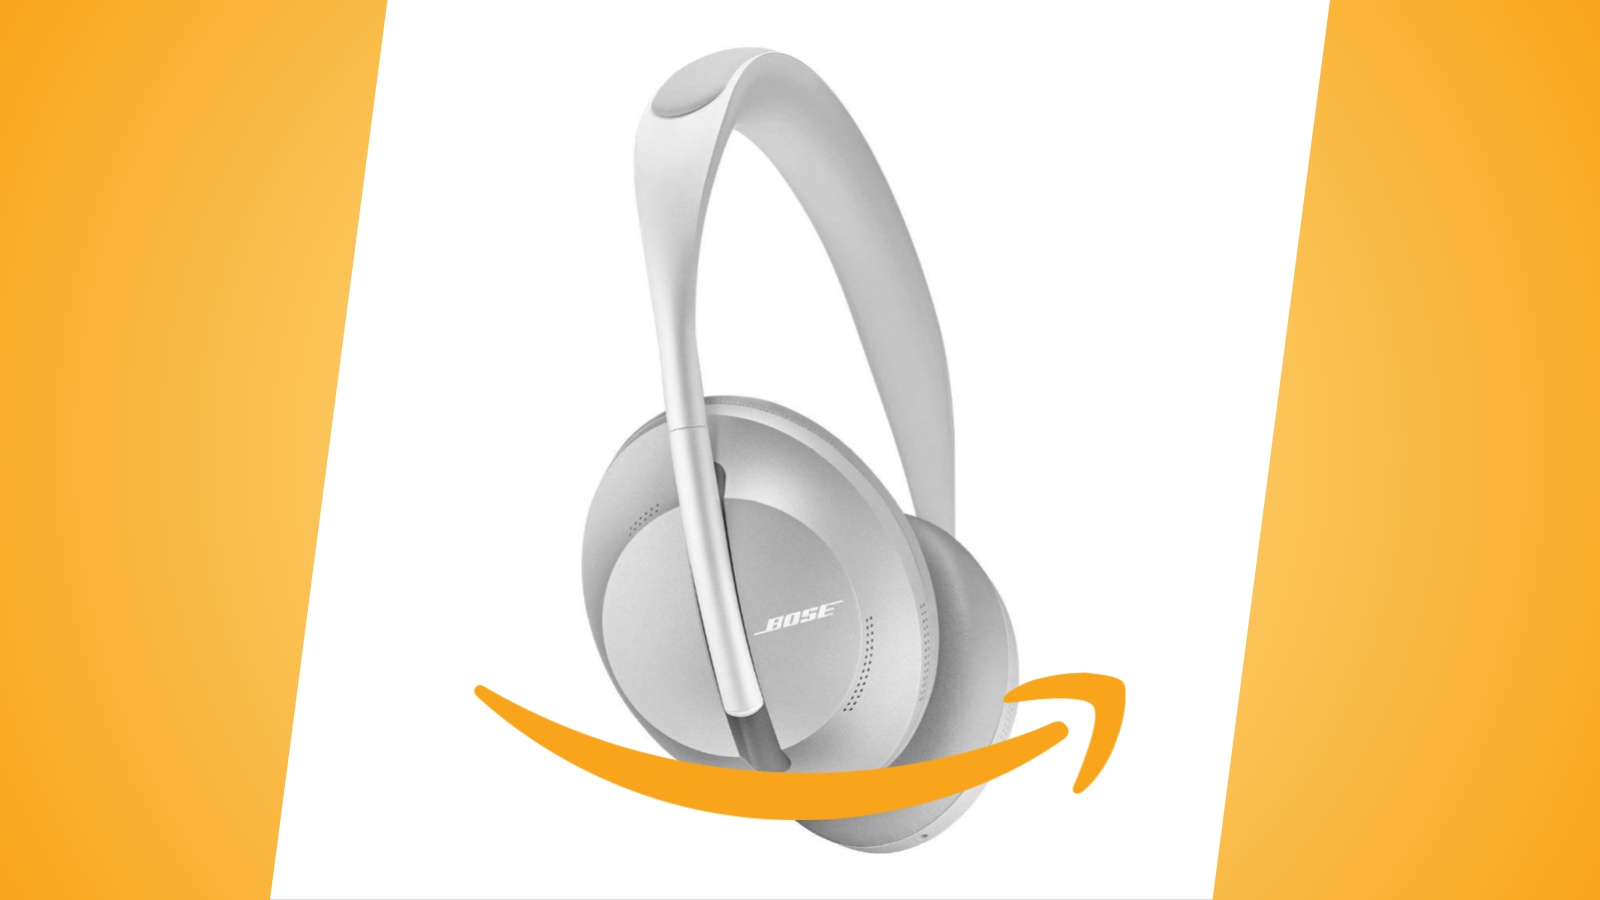 Offerte Amazon: cuffie Bose Noise Cancelling Headphones 700 in sconto con anche un coupon